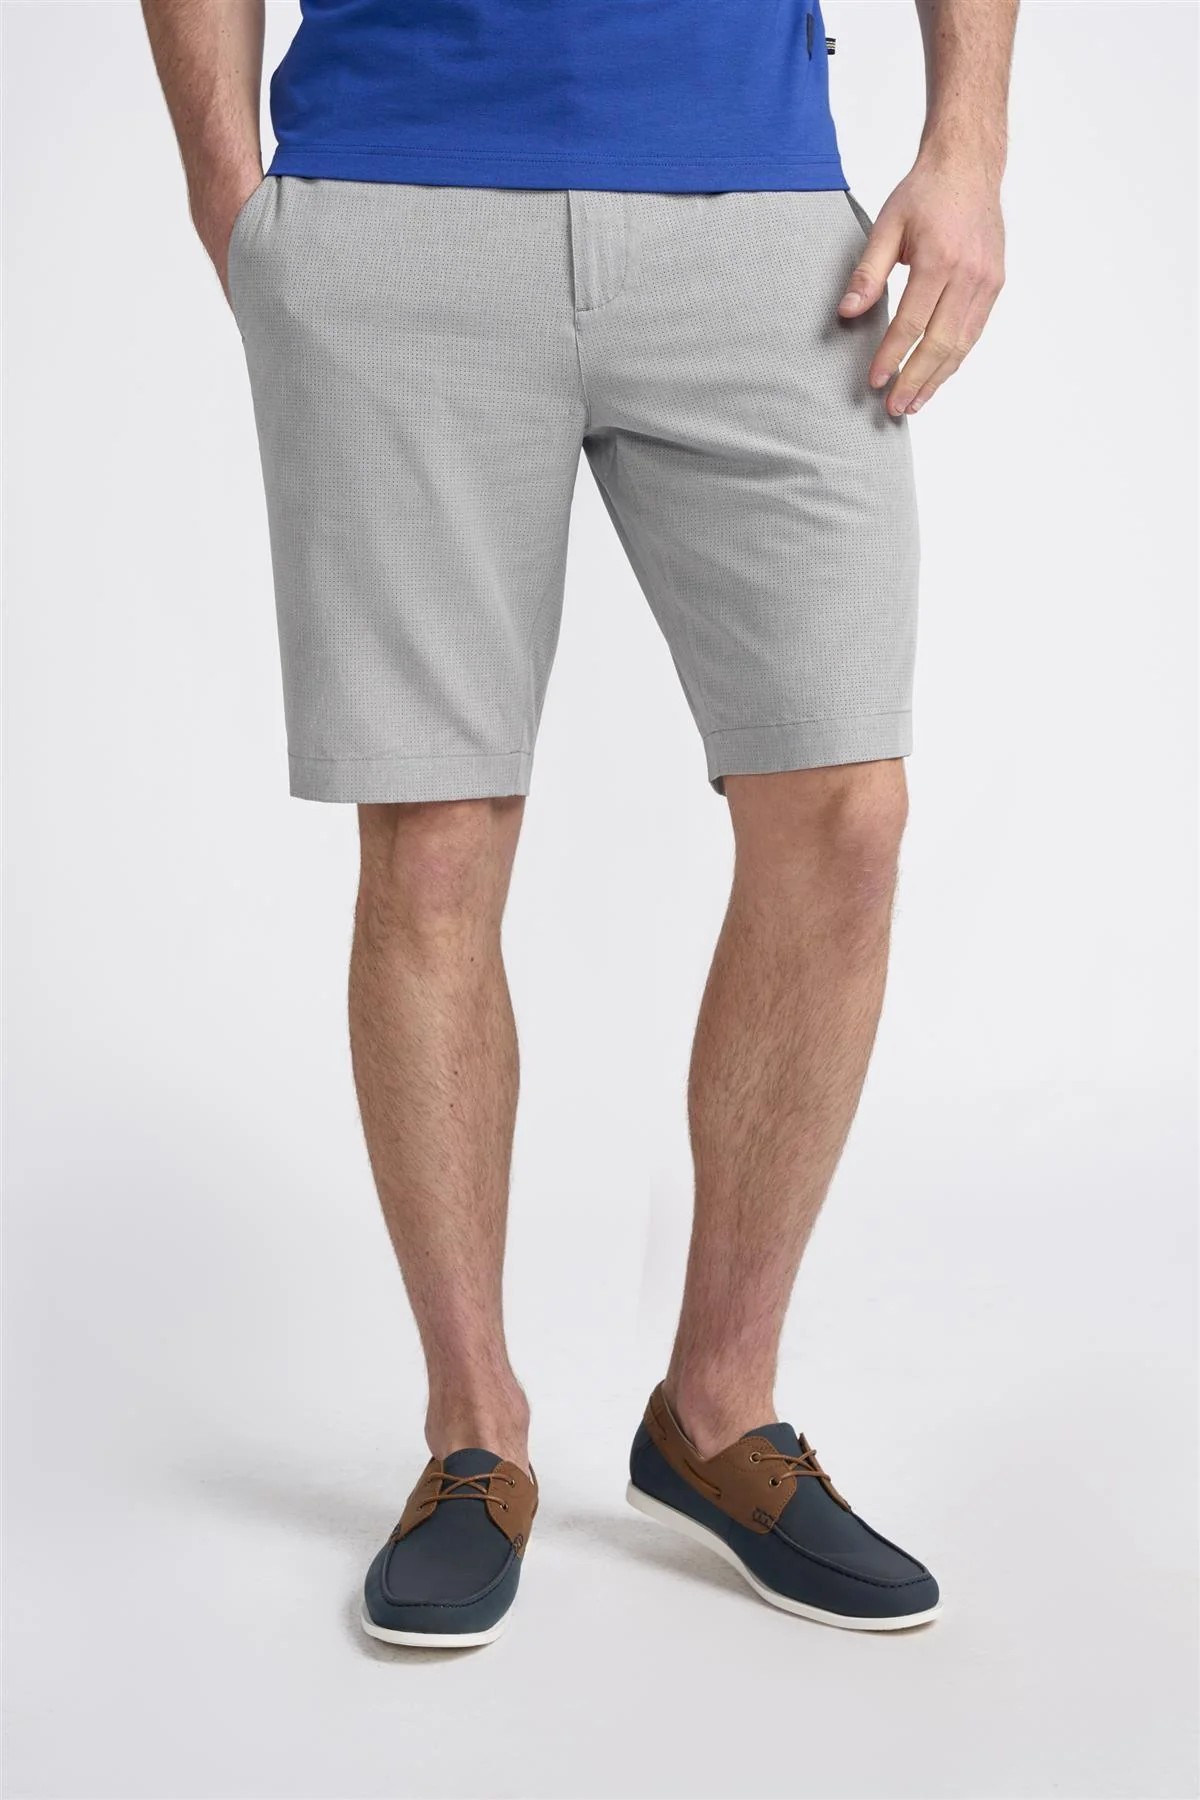 Men's Summer Essential Textured Short – DENVER - Grey